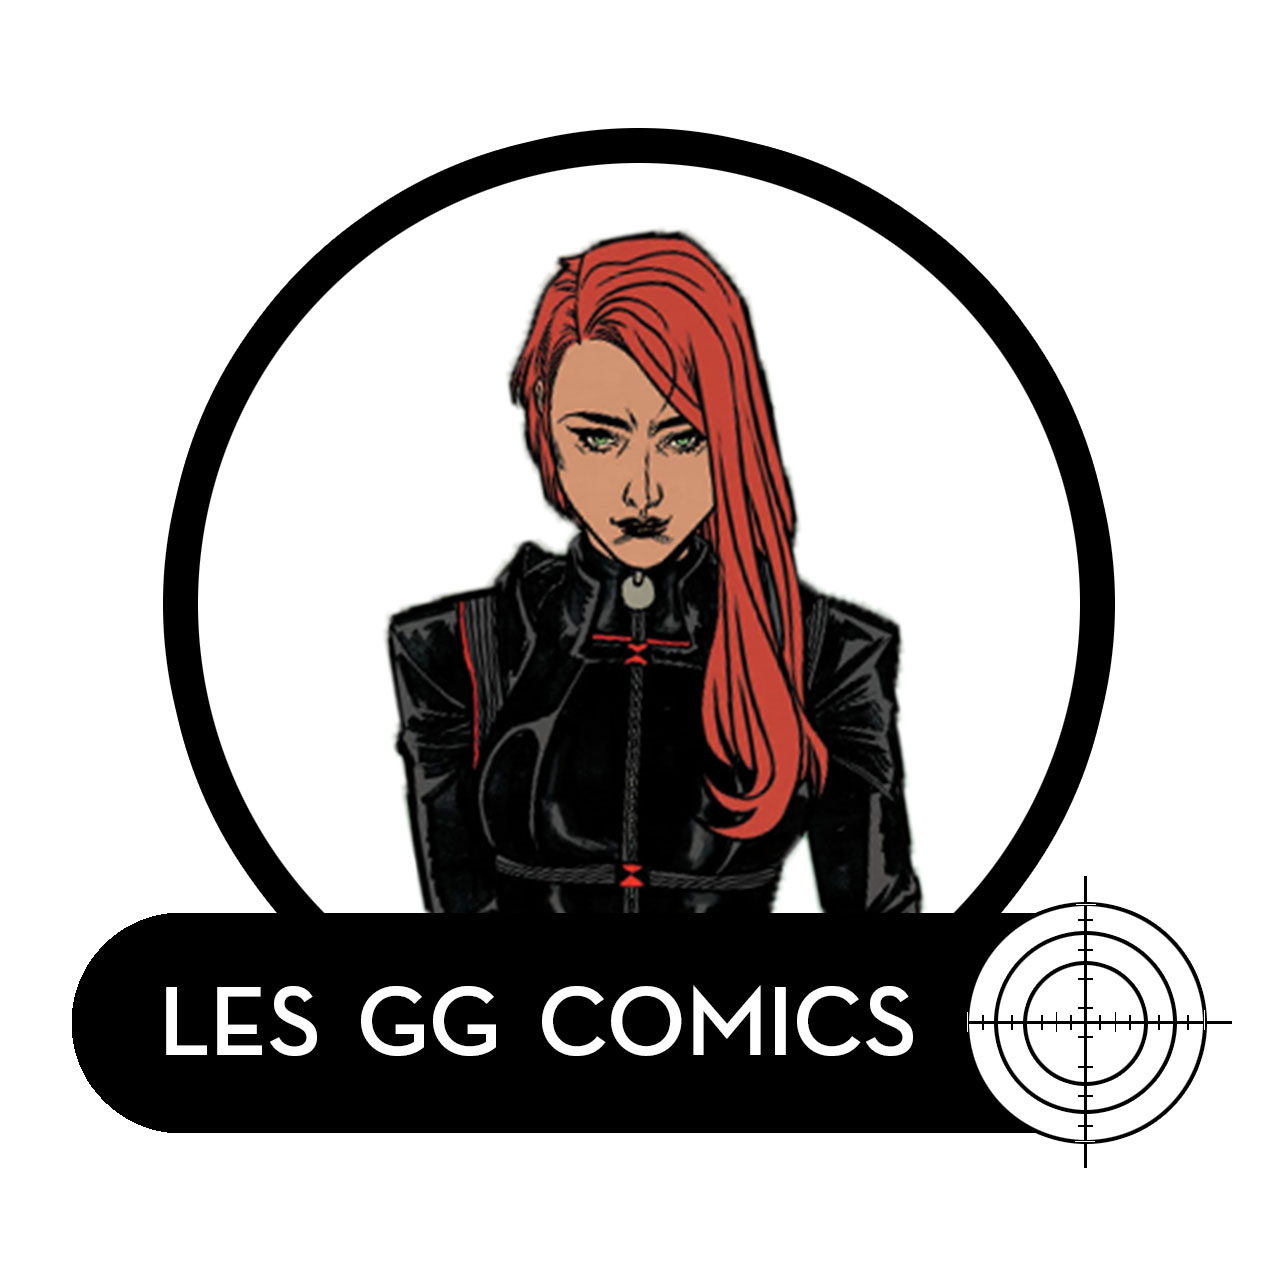 Les GG comics - HS9 : ITW de Elena Casagrande [Paris Manga - Sci-Fi Show 31e édition]